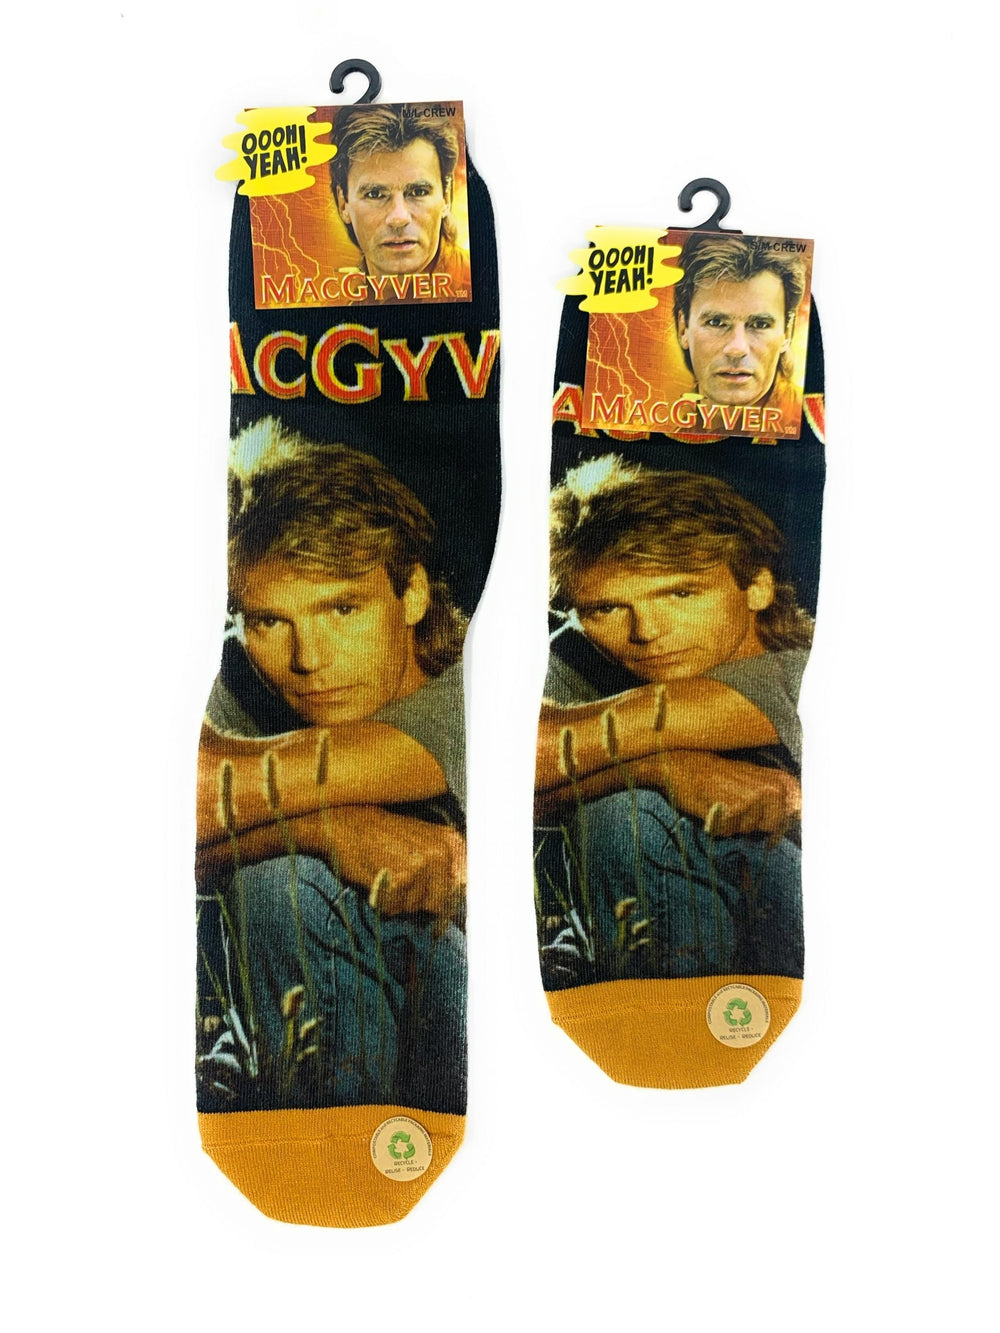 Macgyver Crew Socks - Premium Socks from Oooh Yeah Socks/Sock It Up/Oooh Geez Slippers - Just $9.95! Shop now at Pat's Monograms